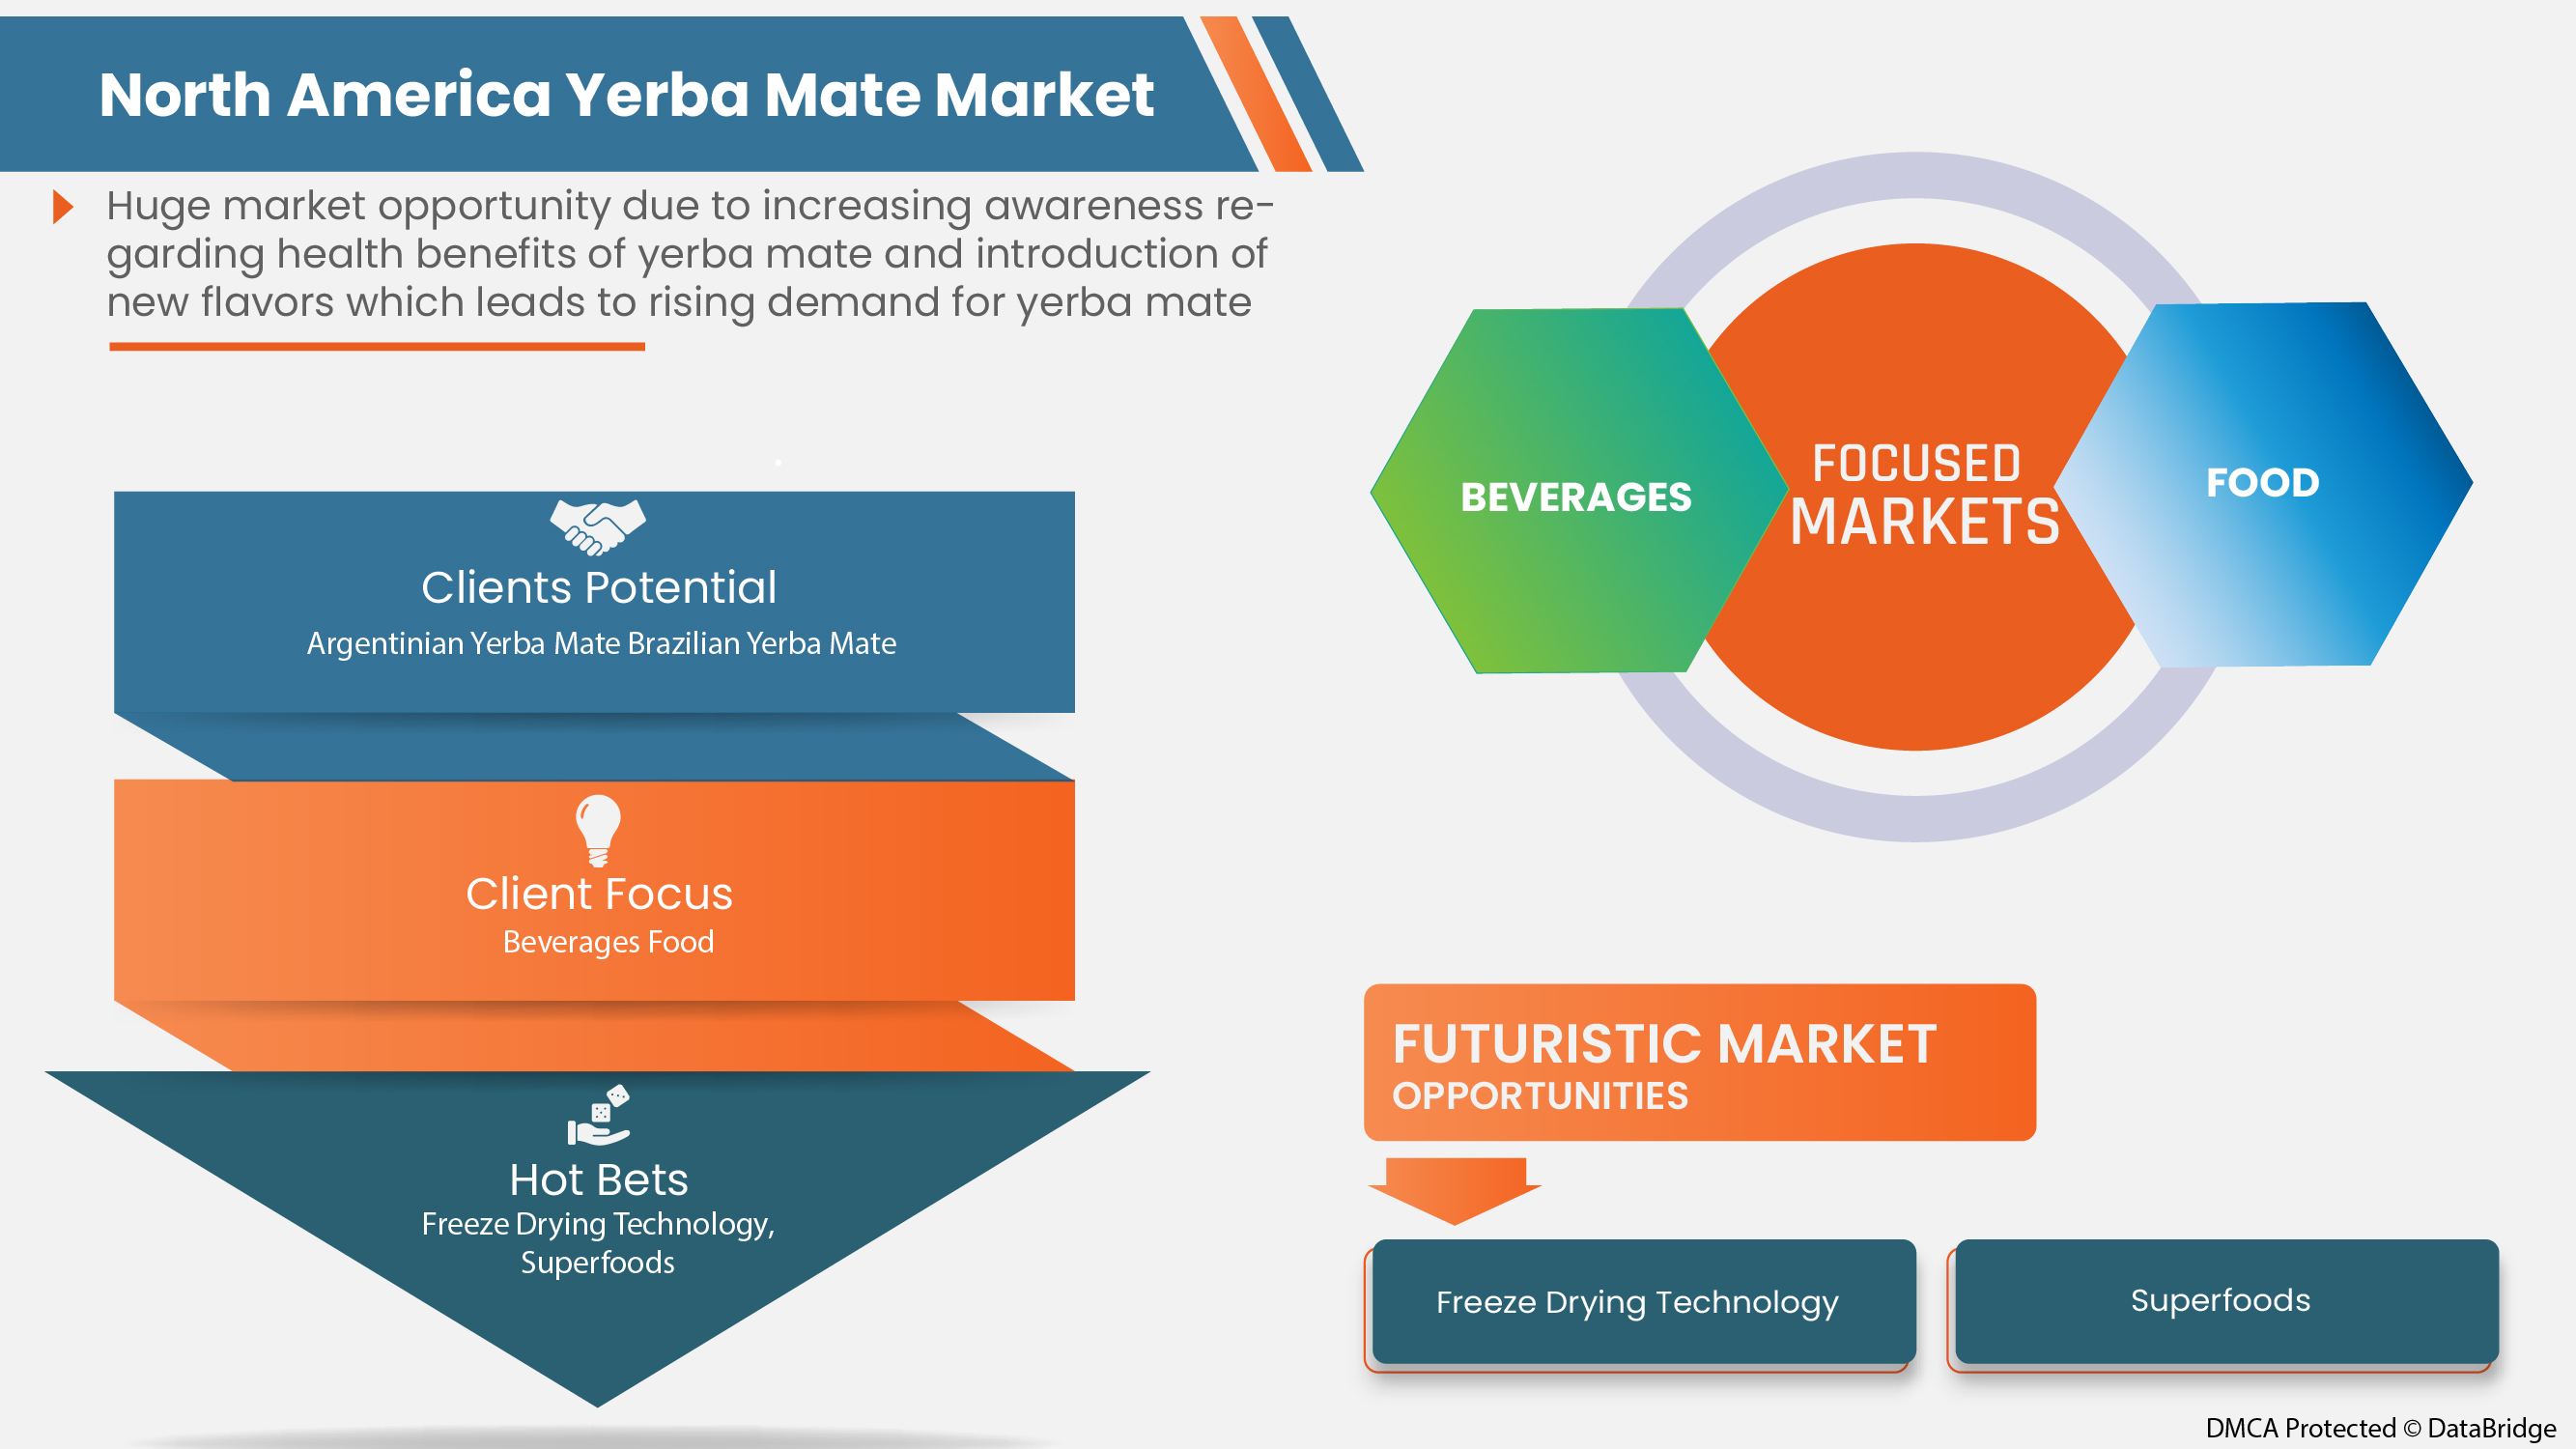 North America Yerba Mate Market